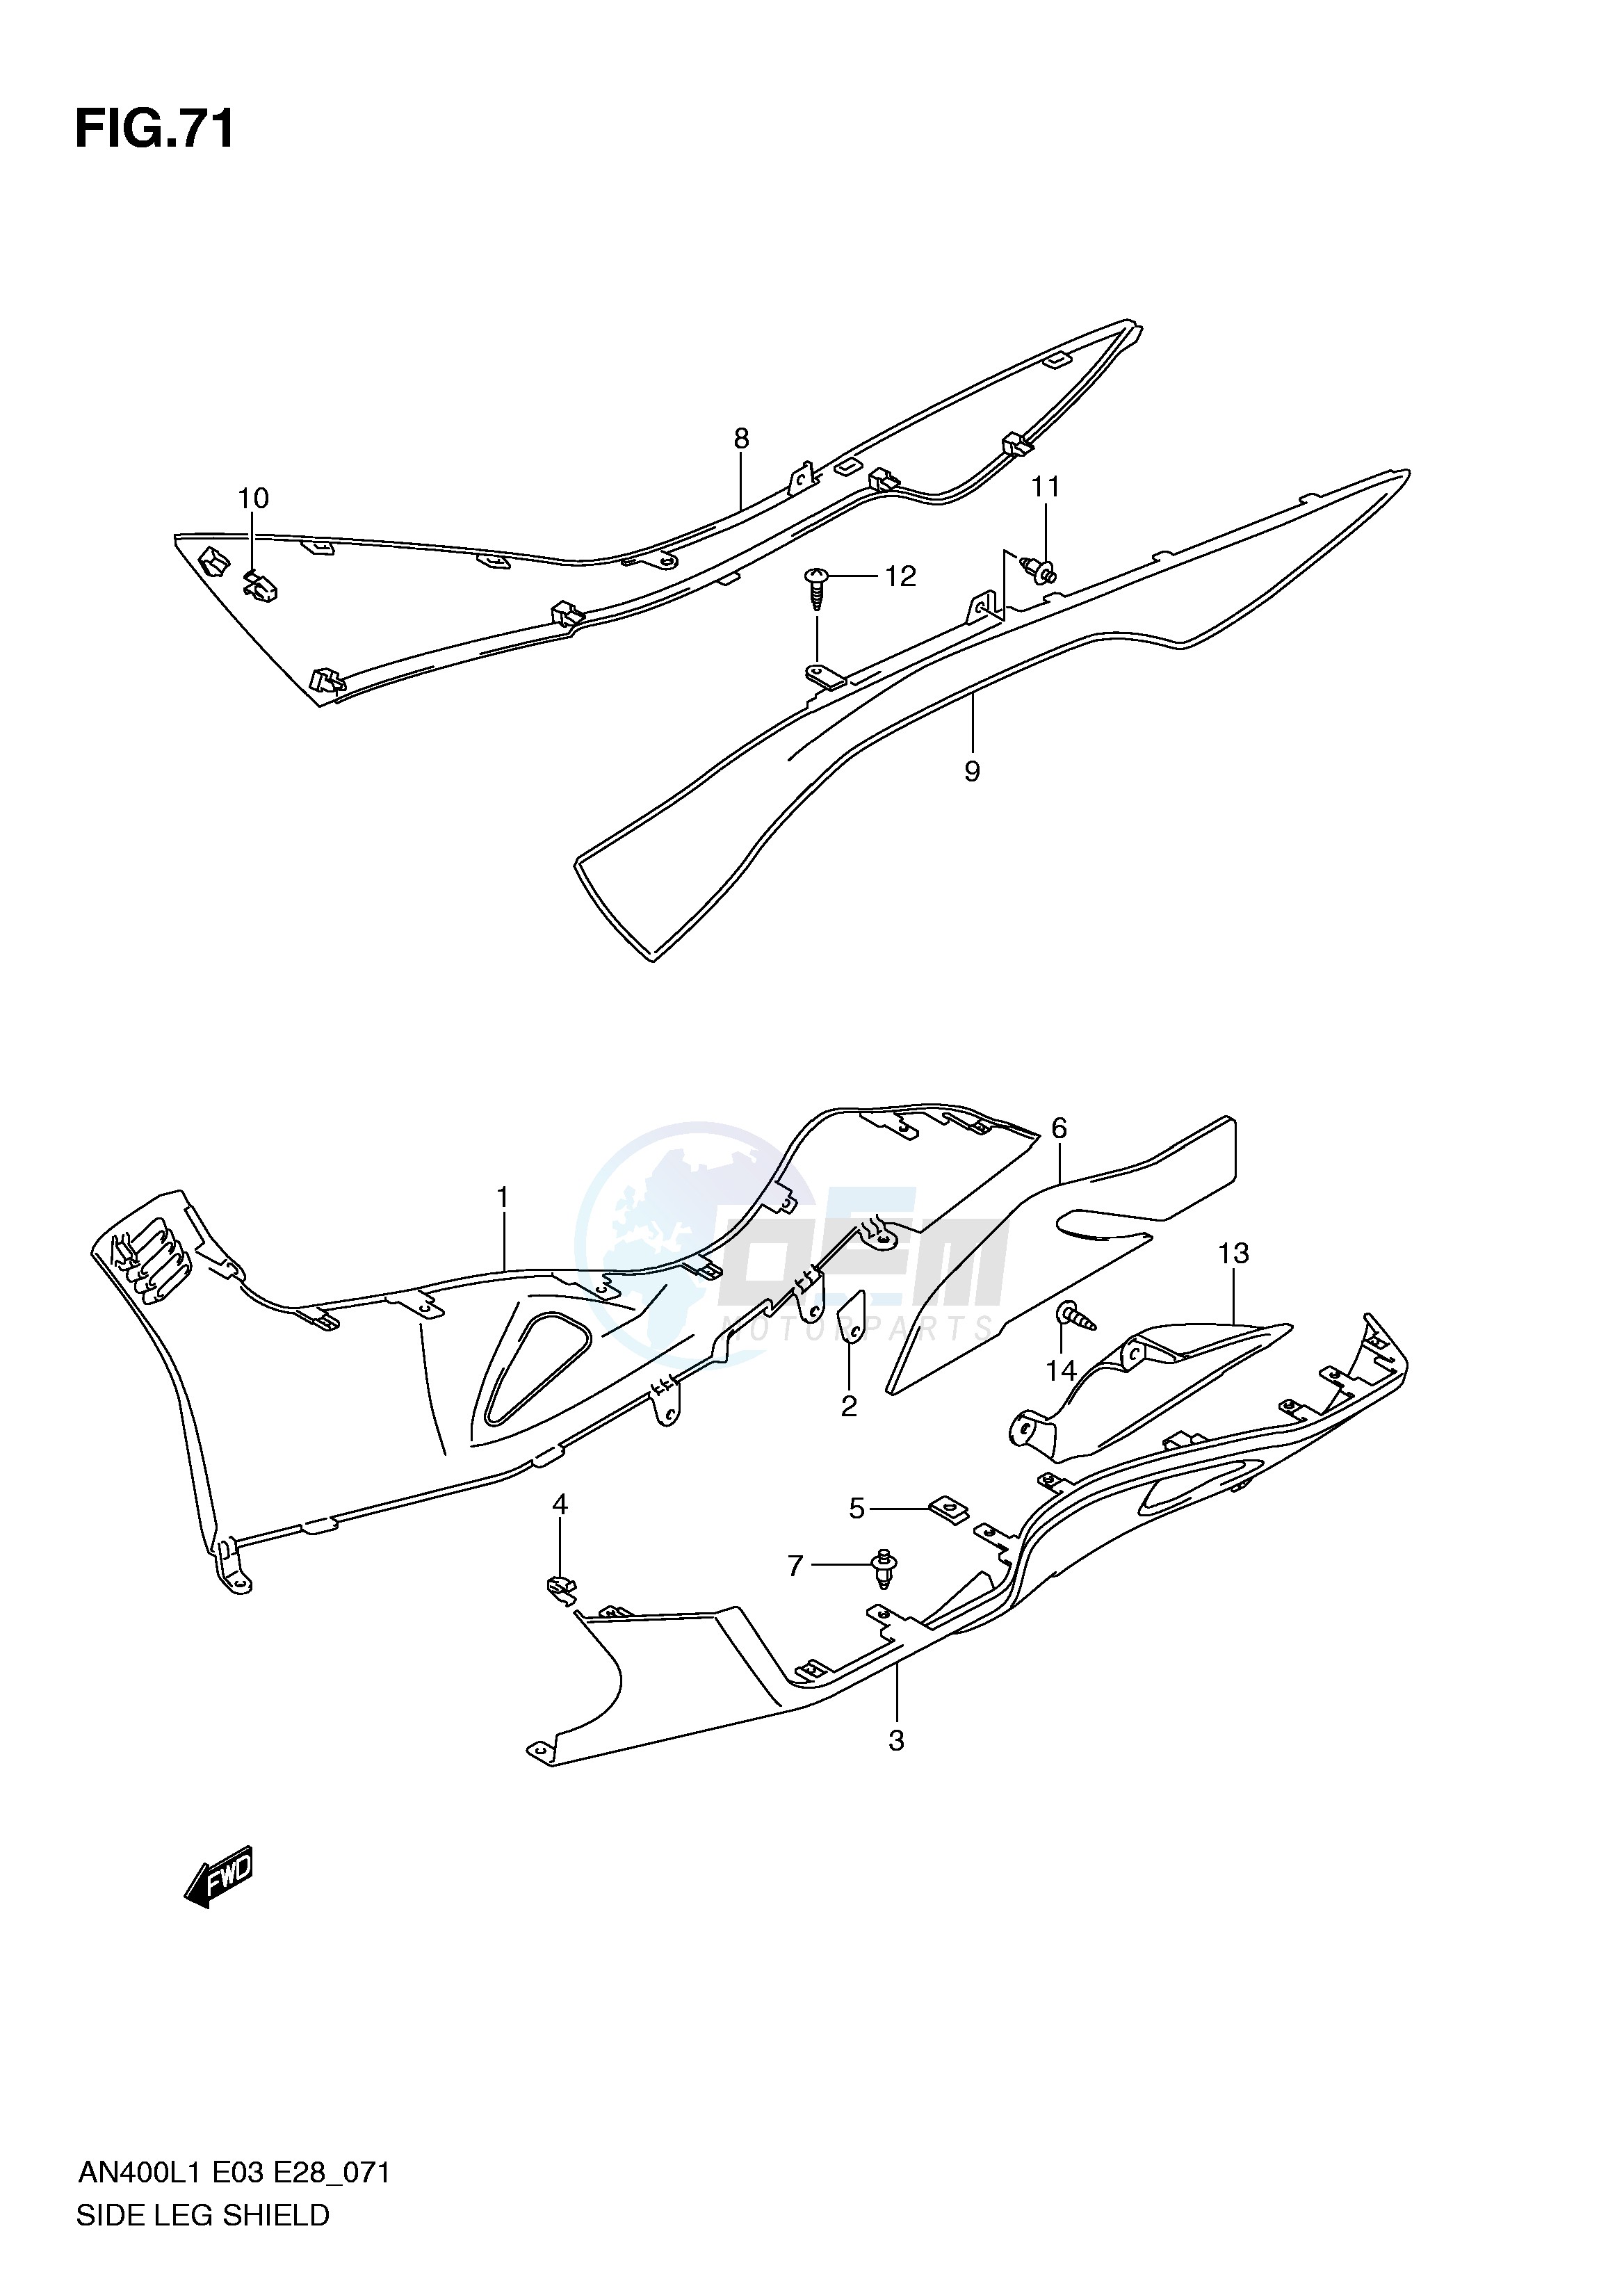 SIDE LEG SHIELD (AN400ZAL1 E33) blueprint